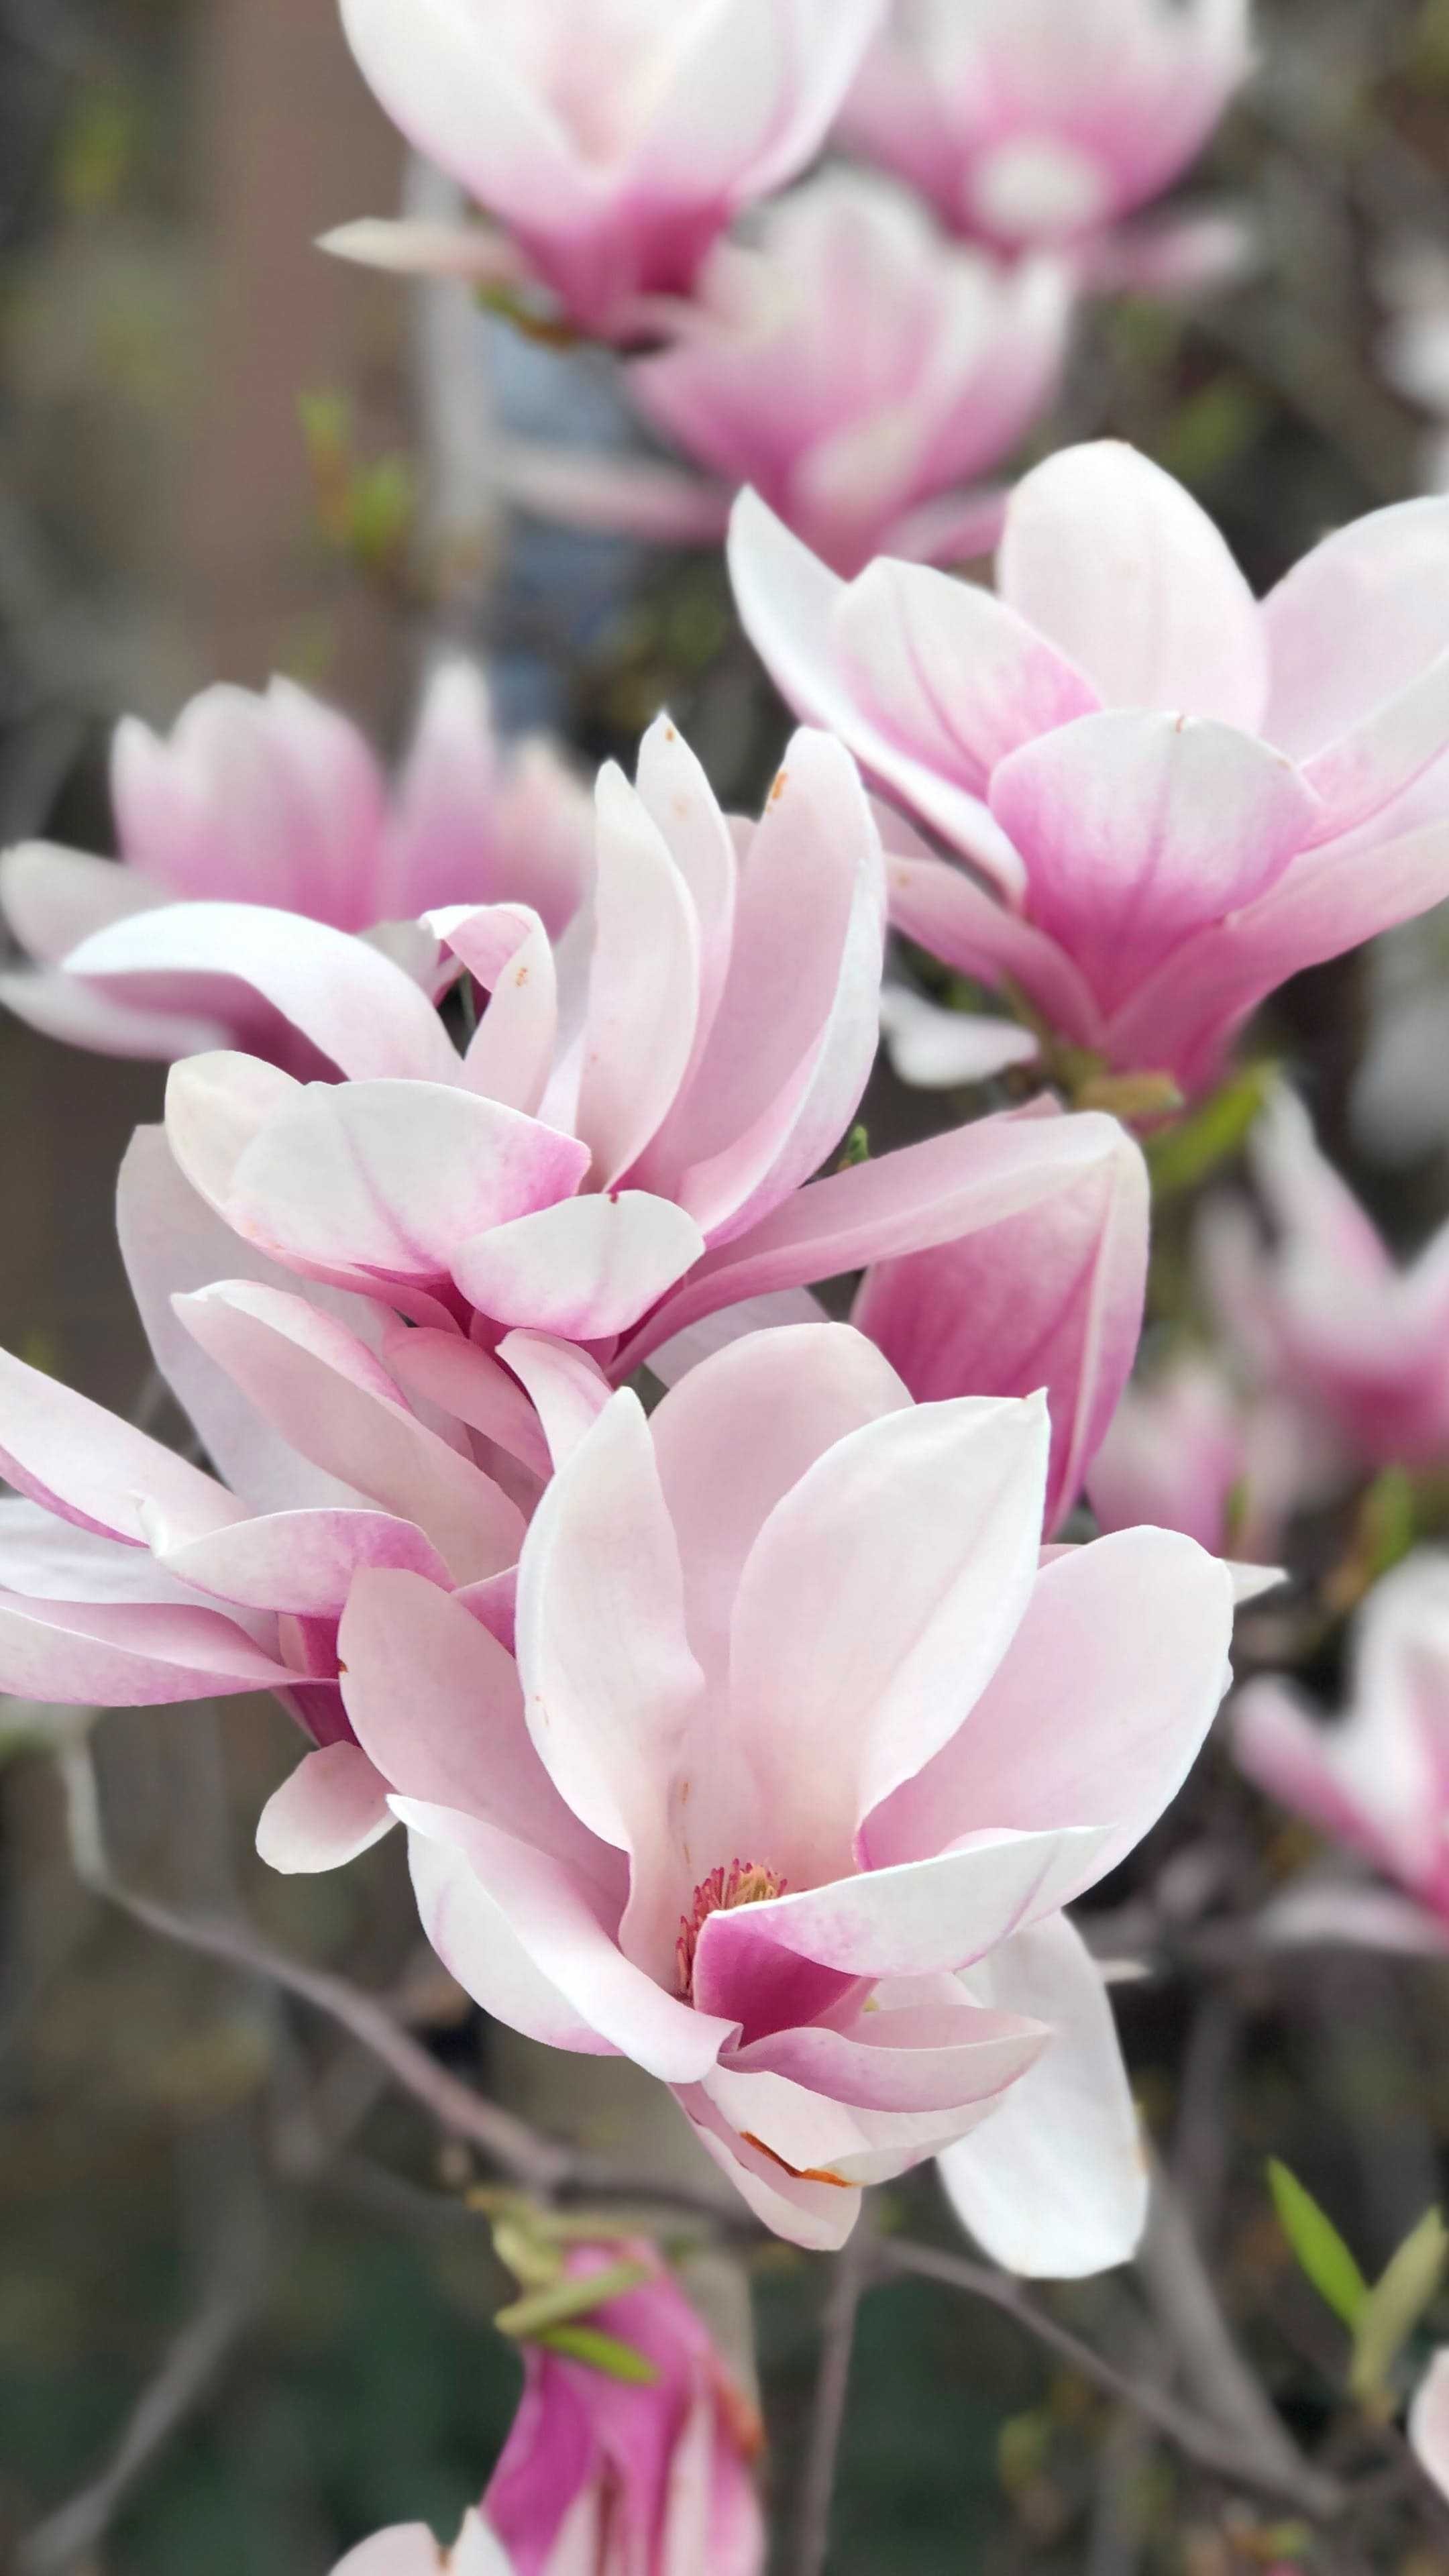 Magnolia wallpapers, Nature's grace, Floral wonderland, Elegant blossoms, 2160x3840 4K Phone